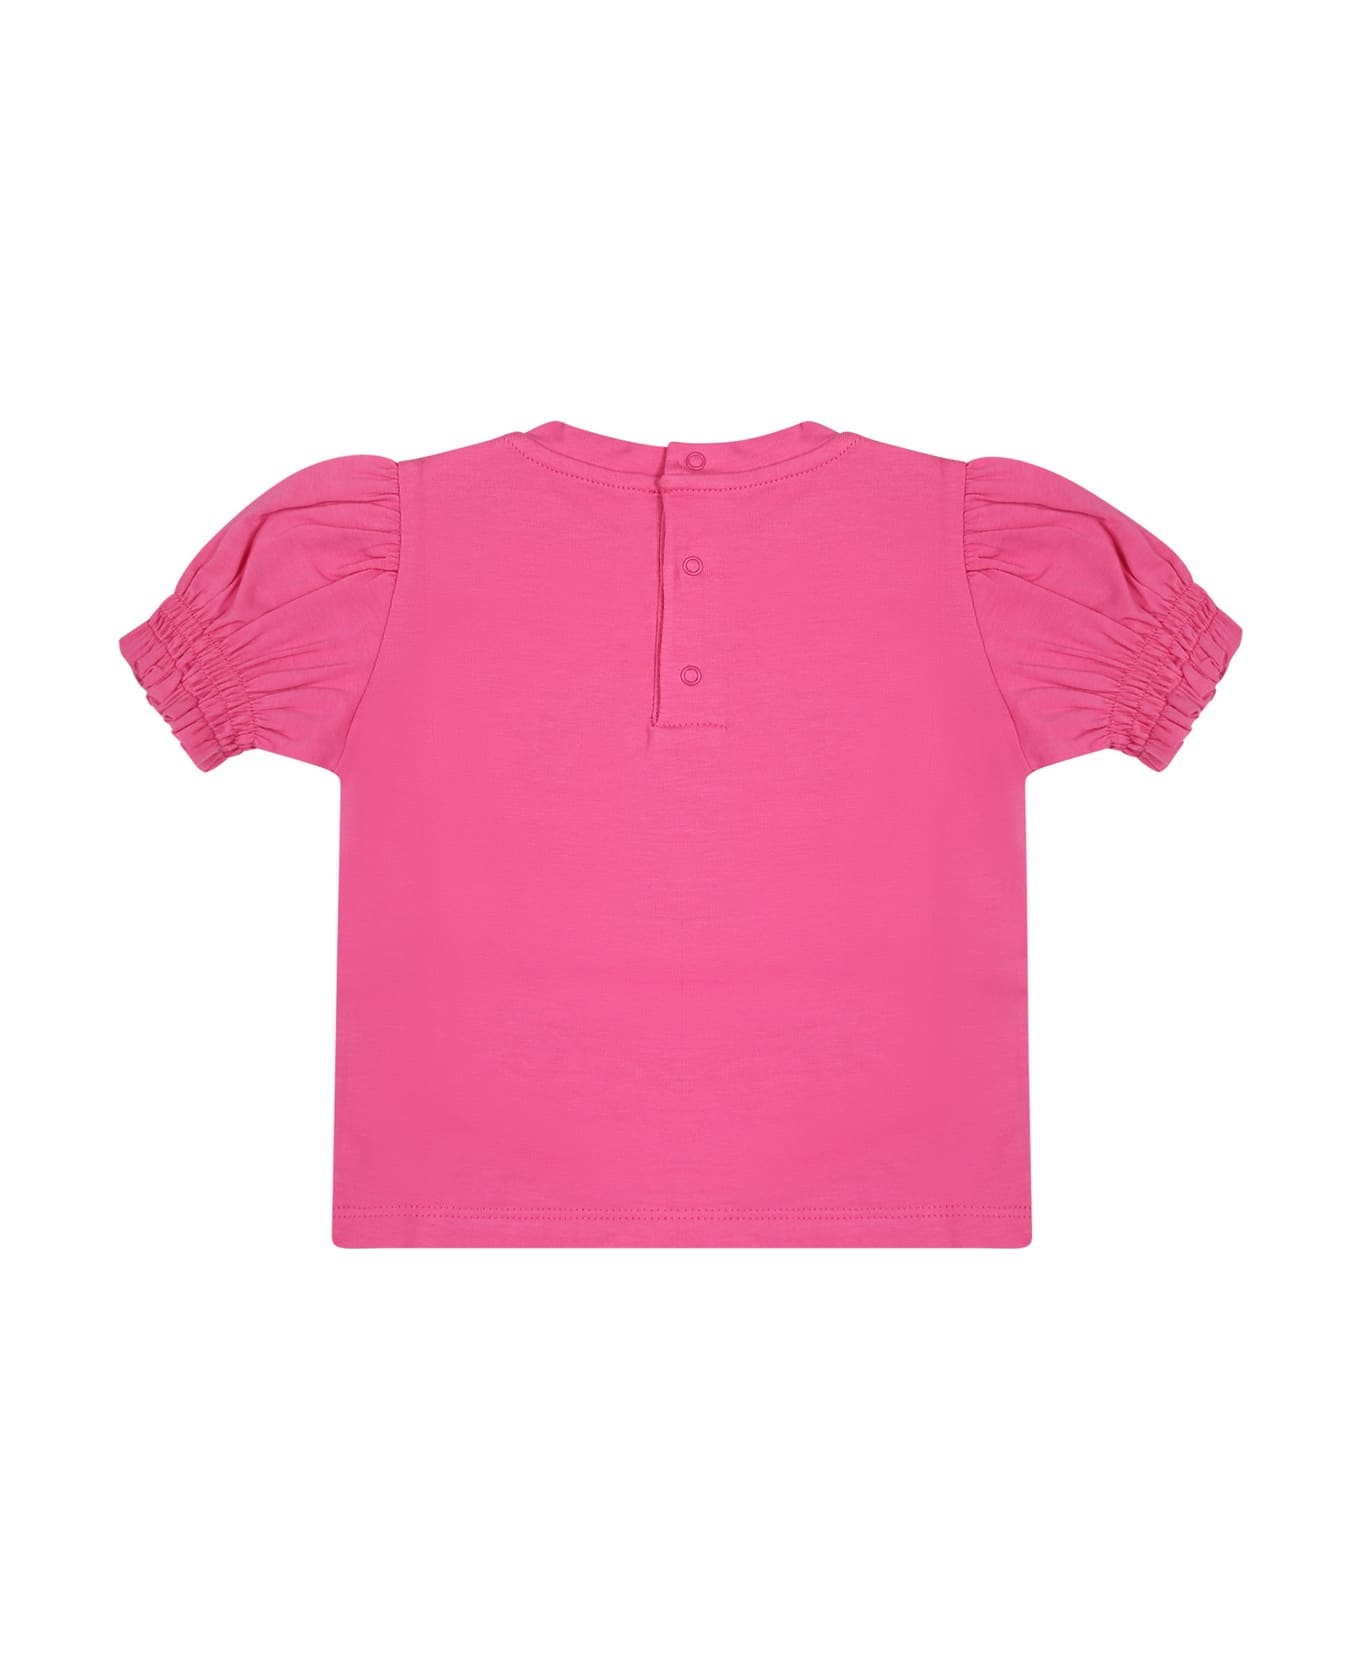 Moschino Fuchsia T-shirt For Baby Girl With Logo And Flowers - Fuchsia